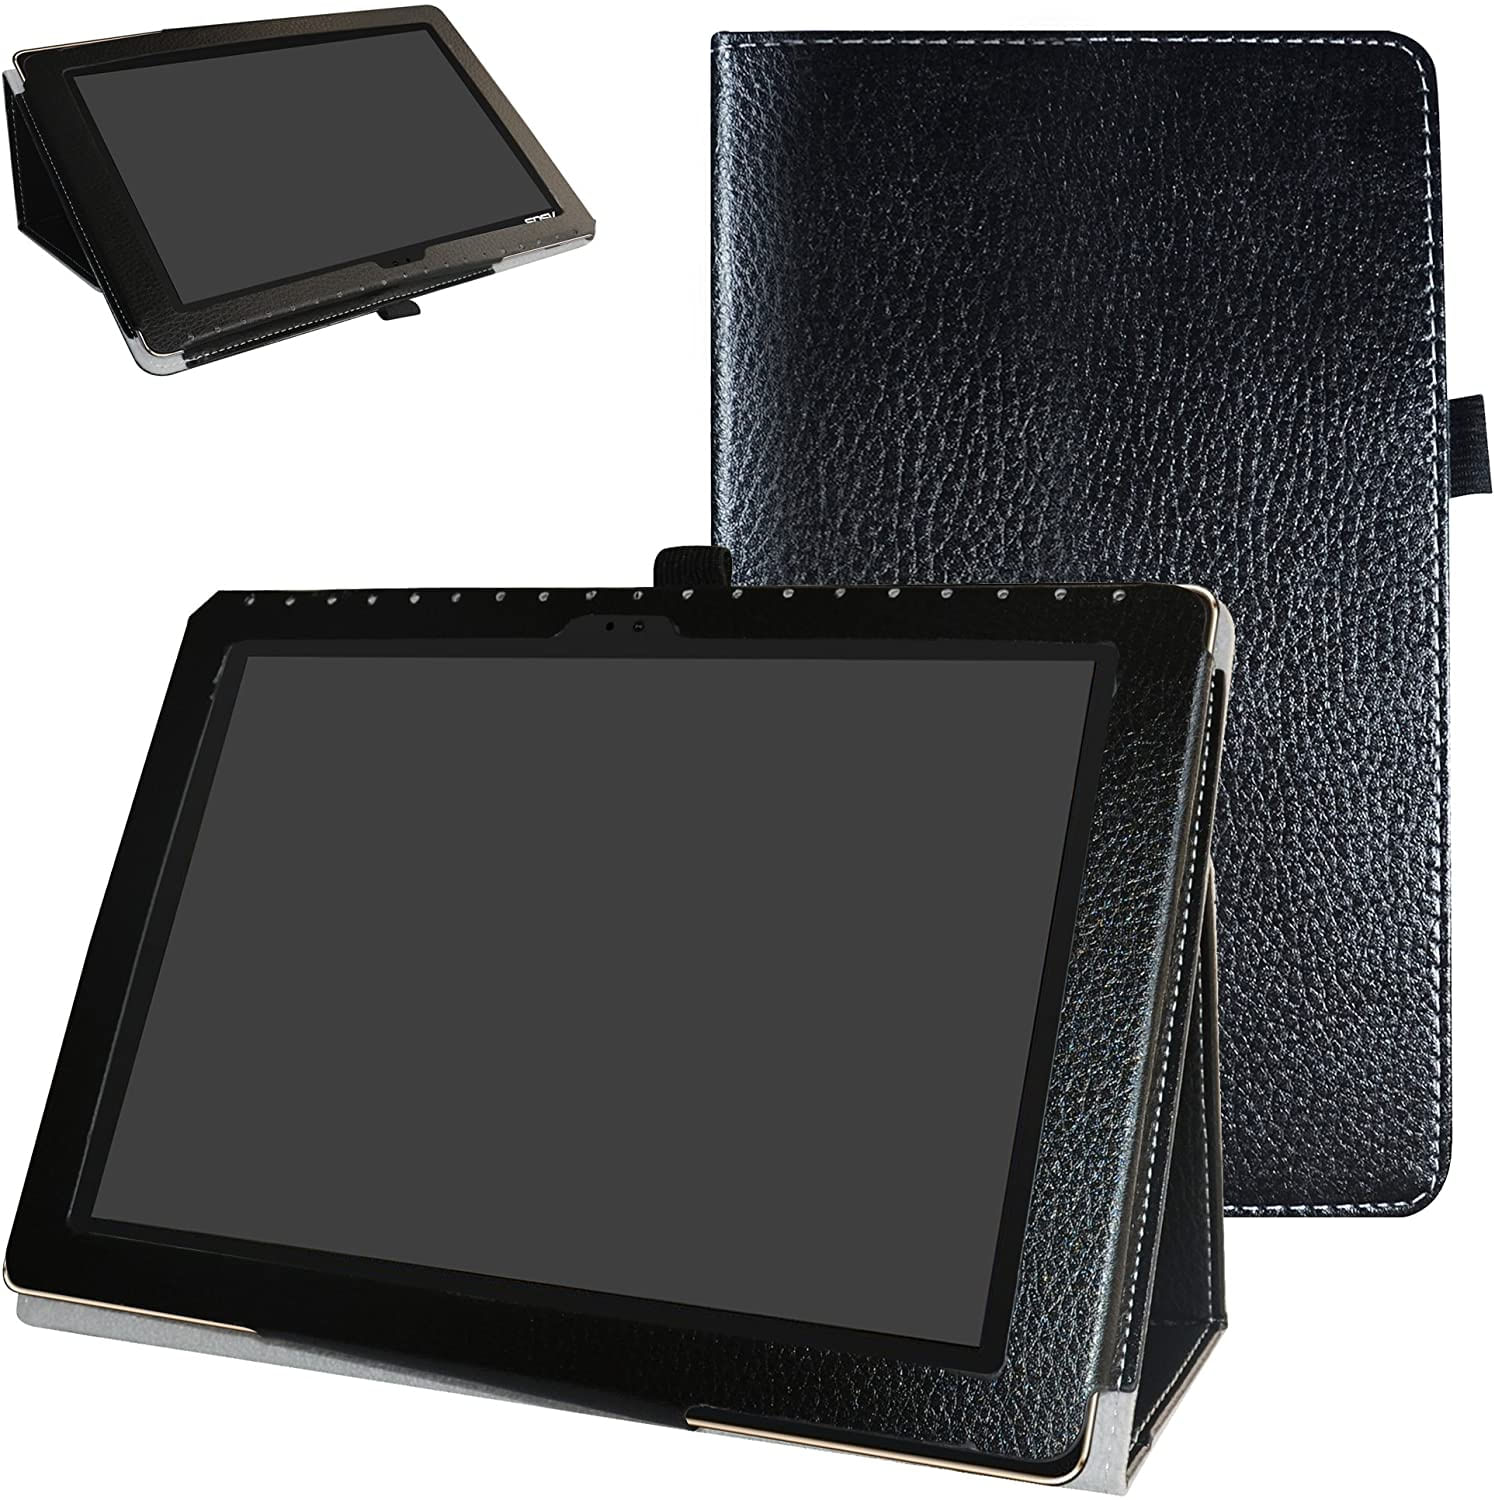 Mama Mouth For Asus Zenpad 10 Case,pu Leather Folio 2-folding Stand Cover For Asus Zenpad Z300c /z300m /z301m /z301ml /z301mfl 10.1-inch Tab